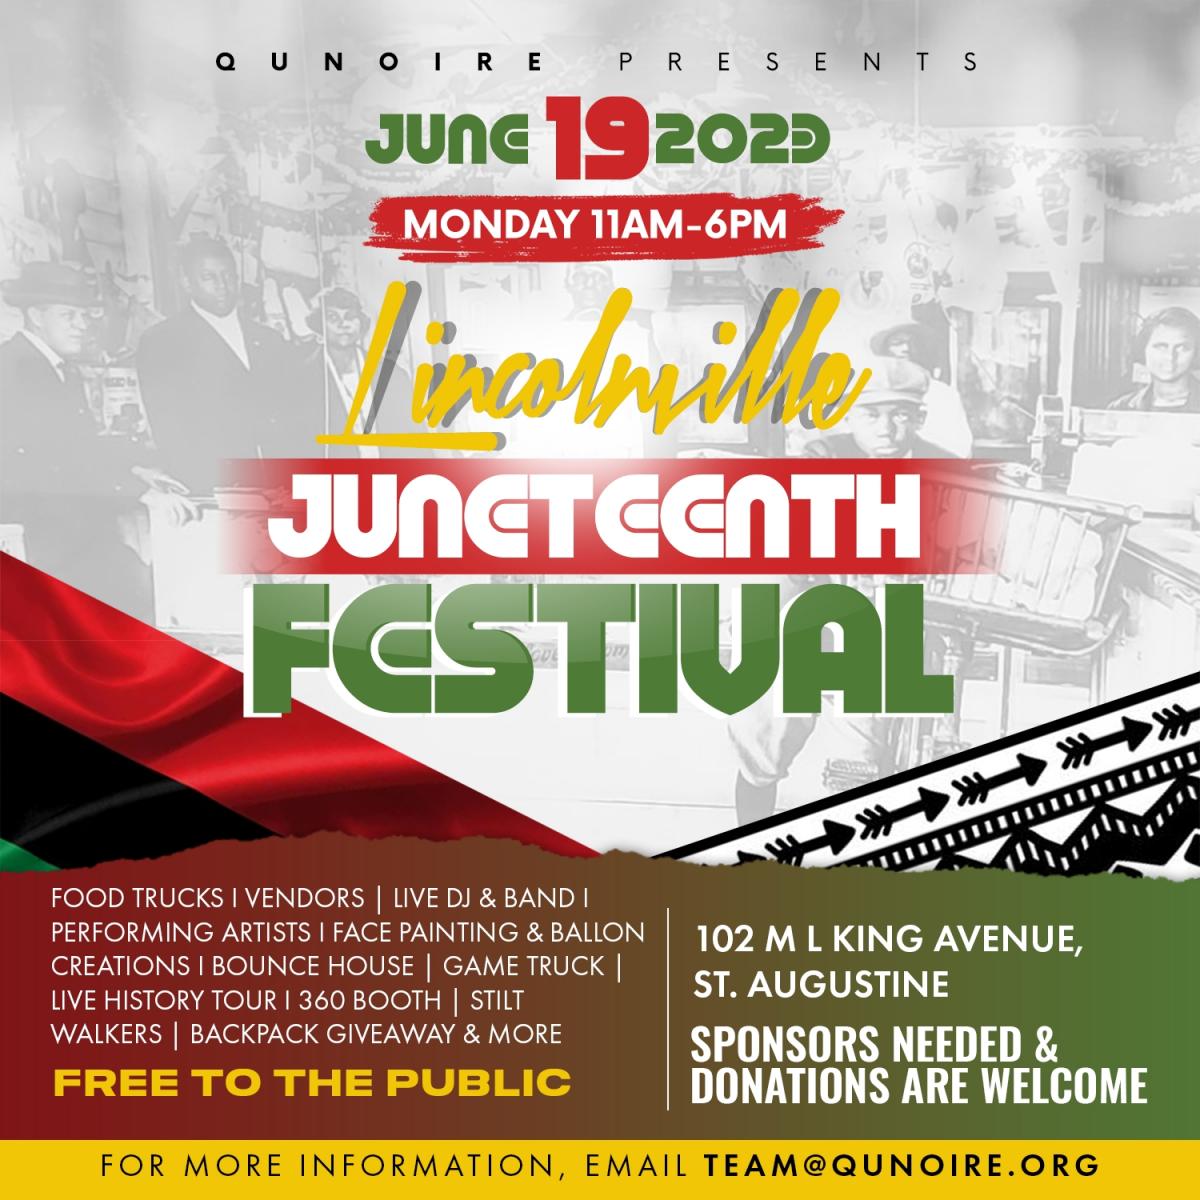 Lincolnville Juneteenth Community Festival